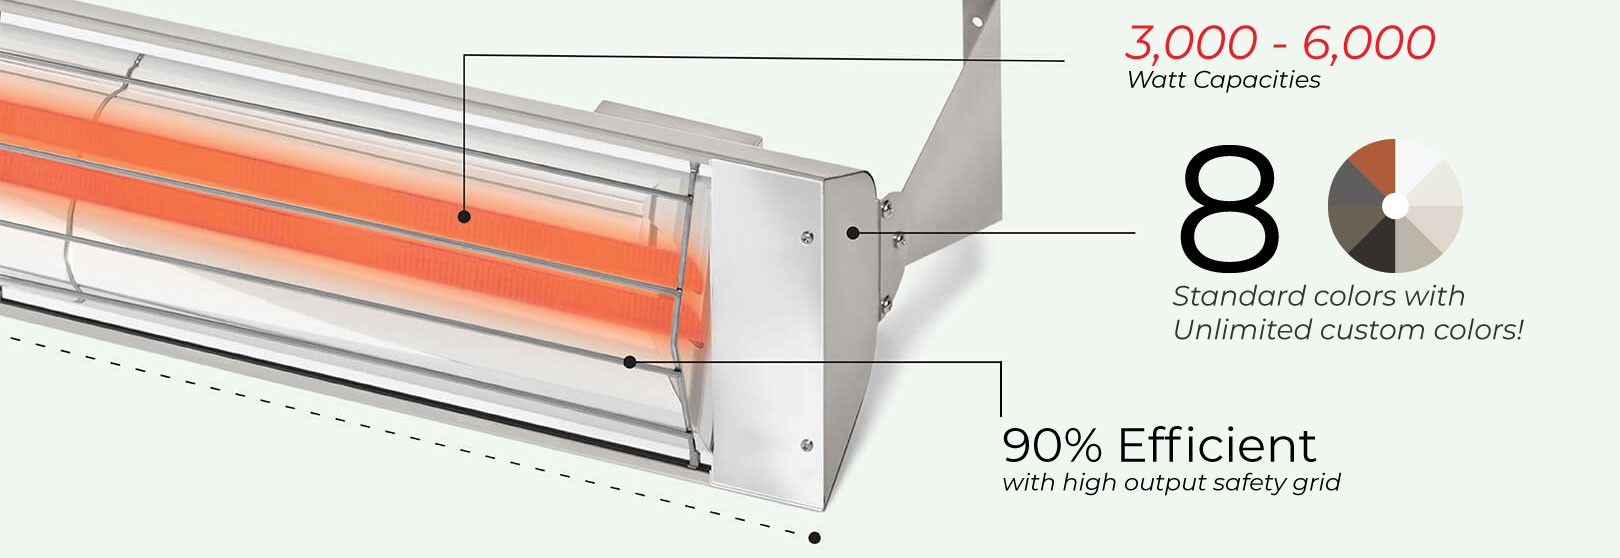 Infratech WD-Series Heater Info Banner